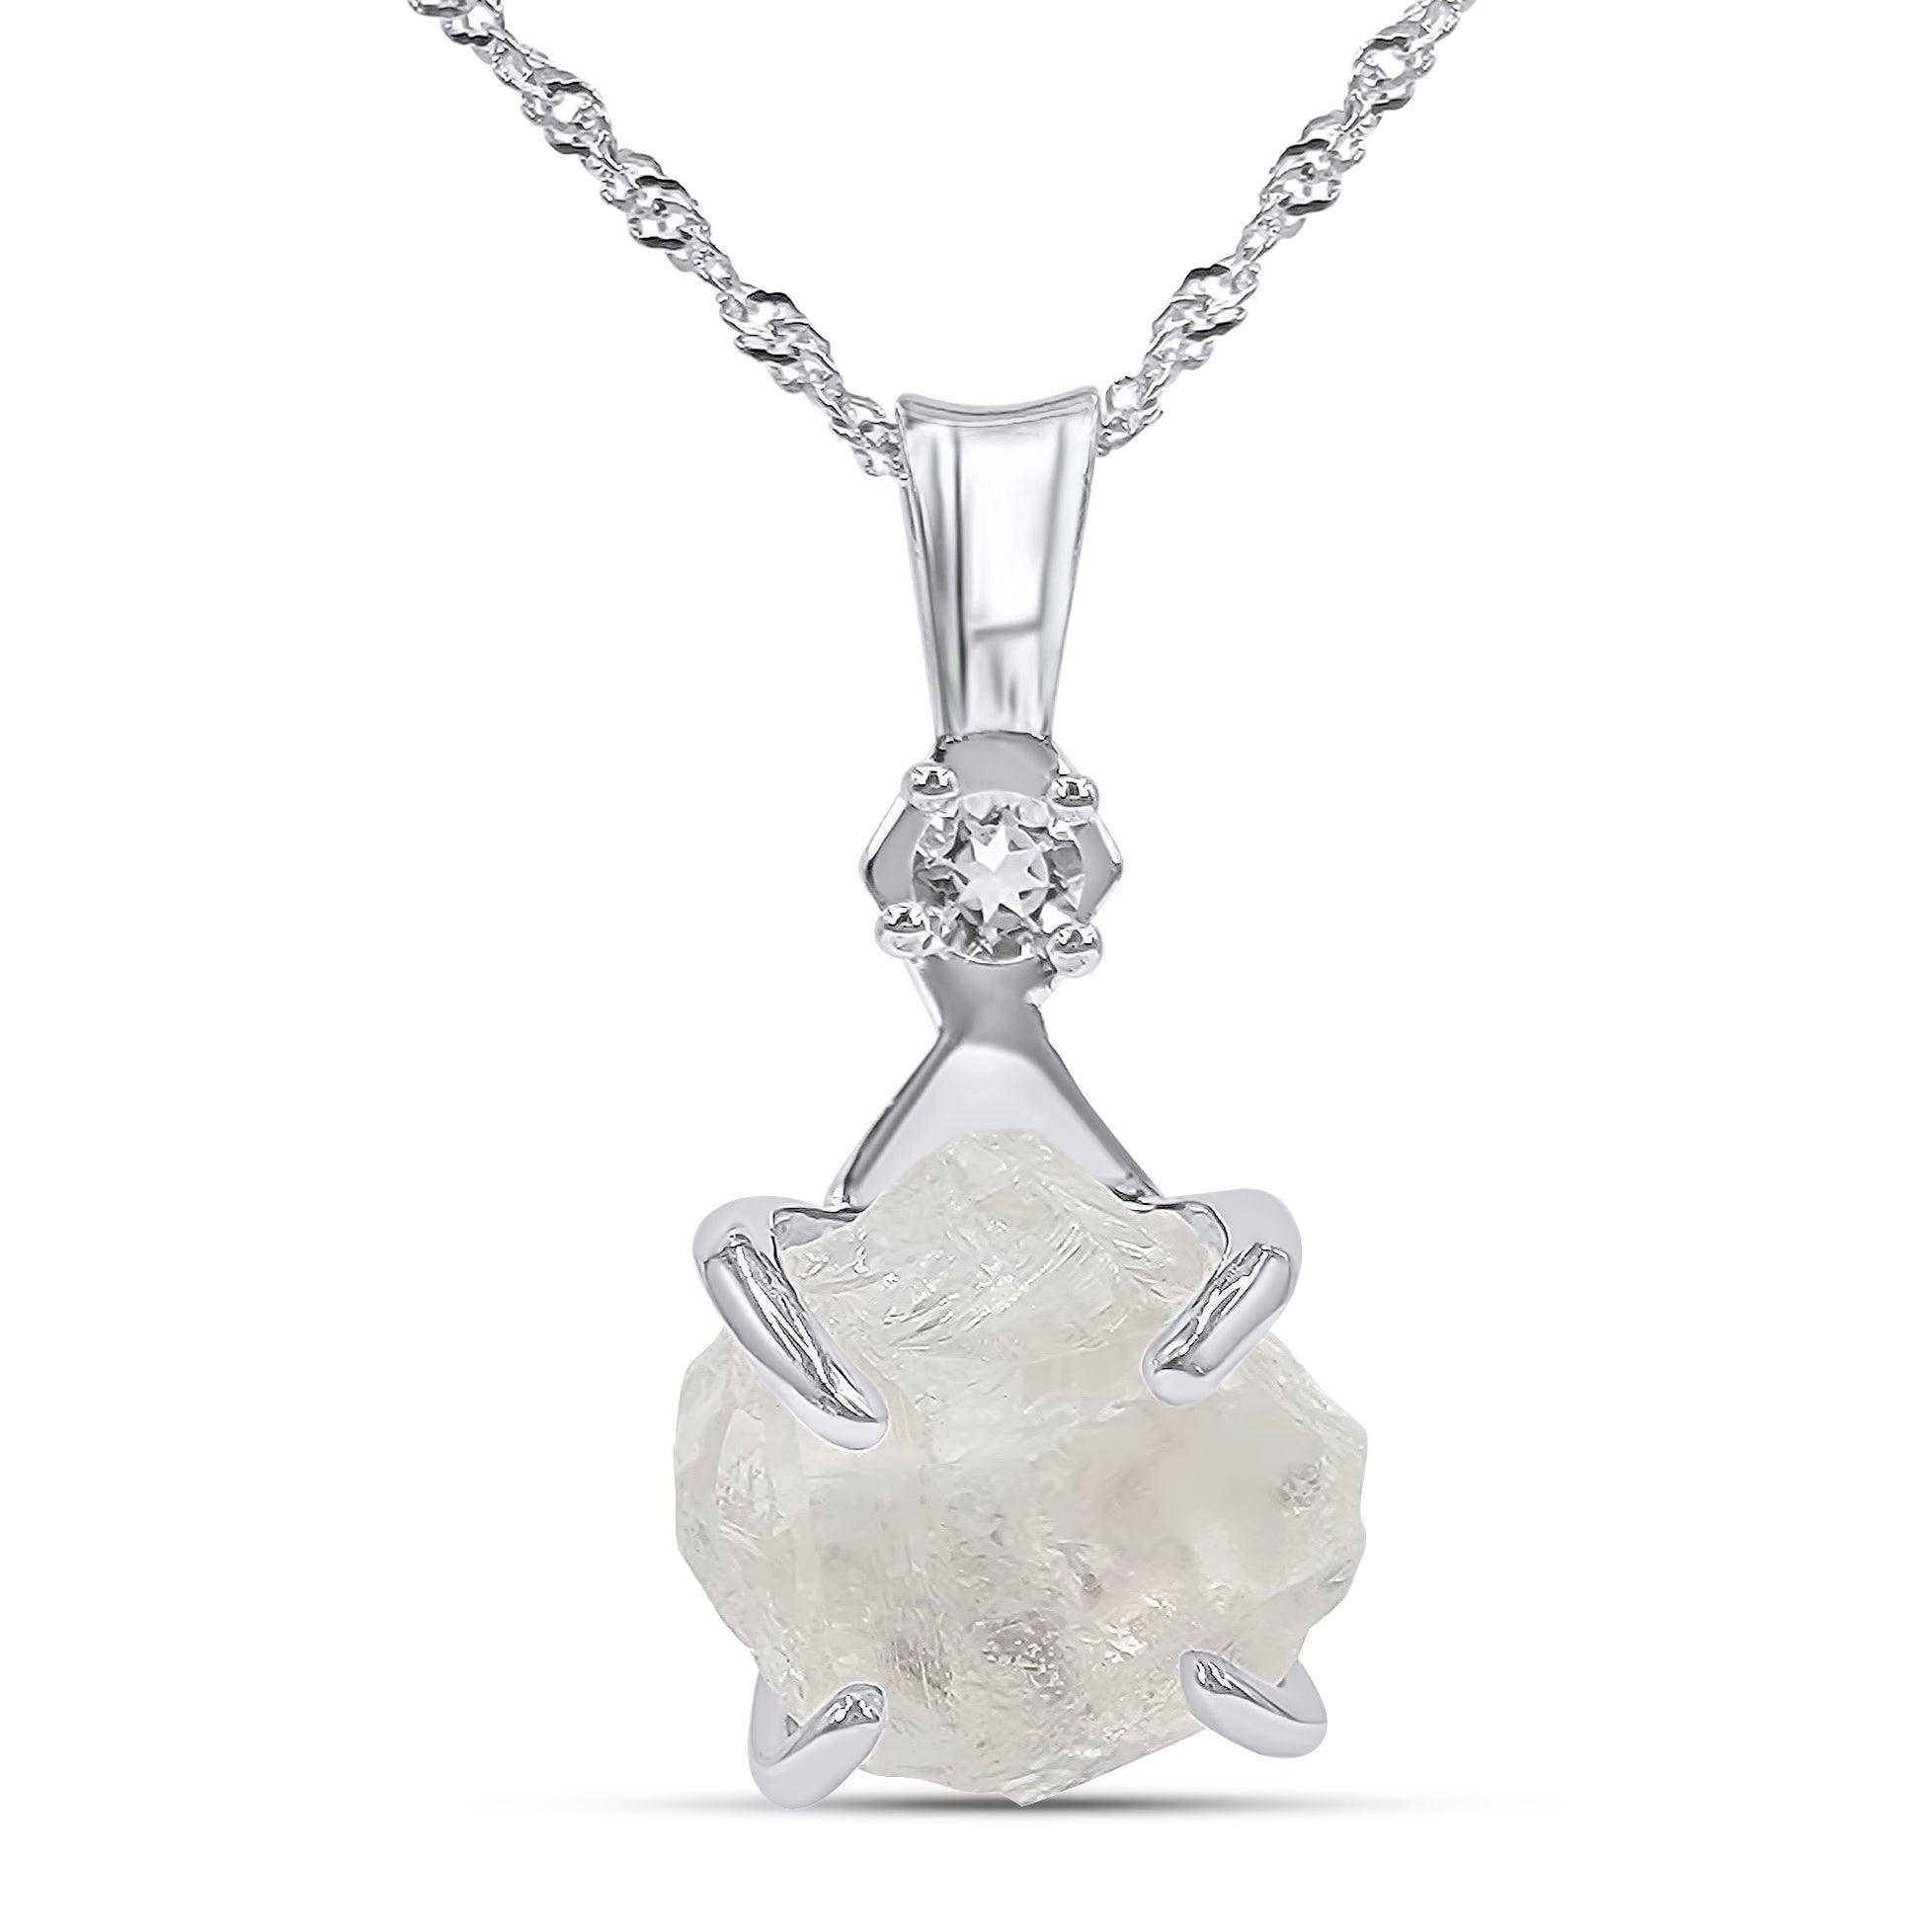 Raw Clear Quartz Crystal Necklace - Uniquelan Jewelry